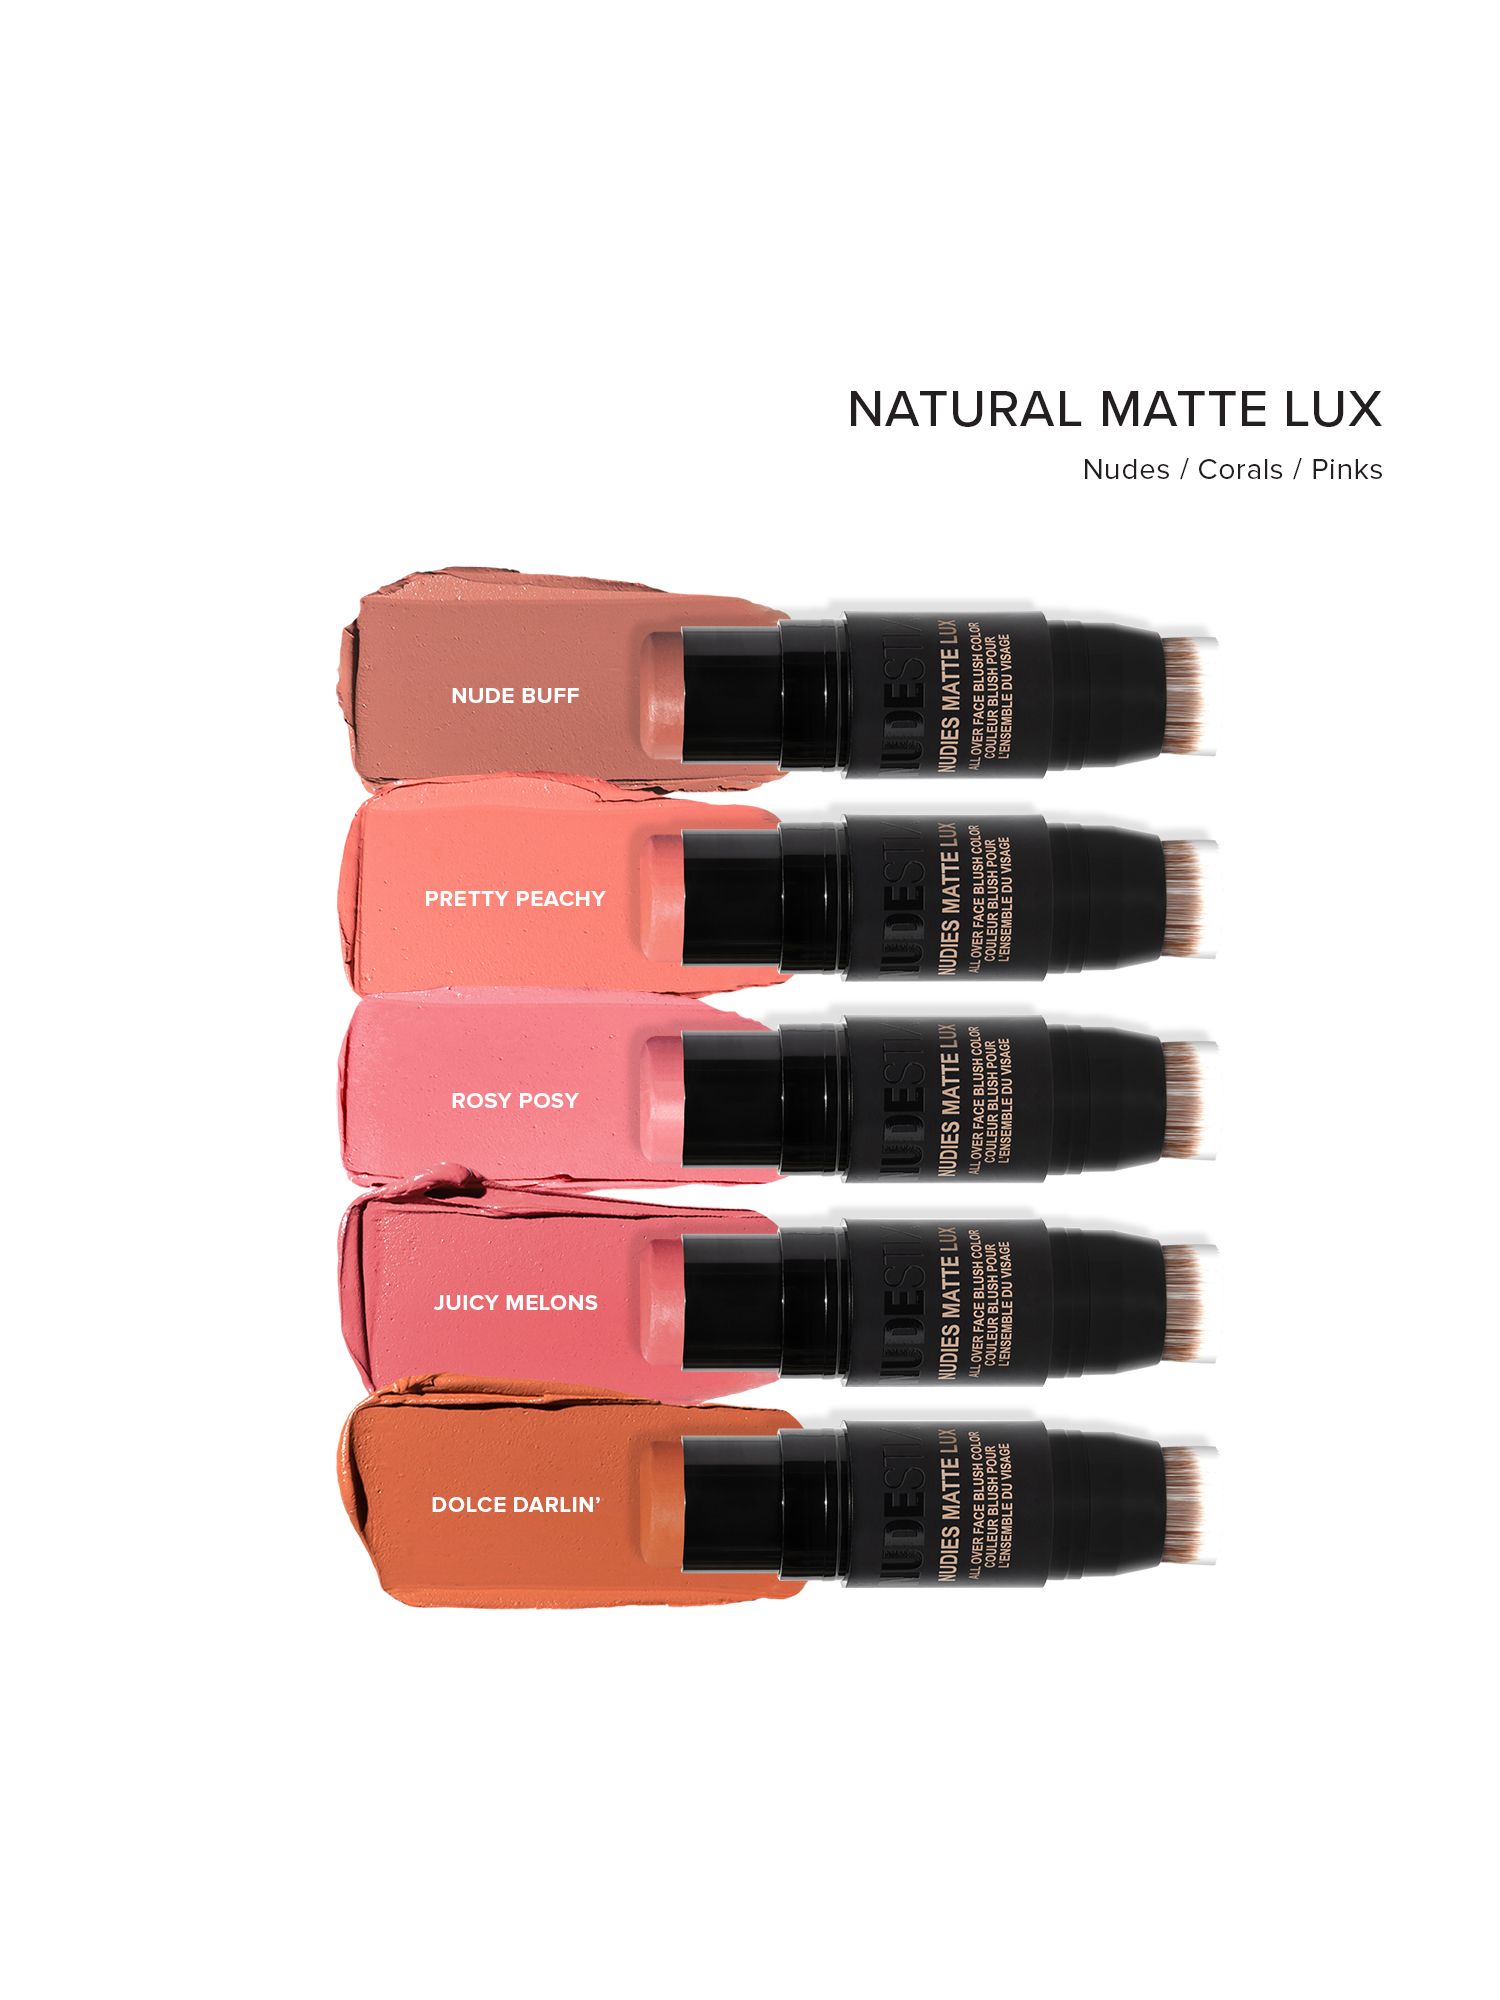 Nudestix Nudies Matte Lux All-Over Blur Blush Natural Colour, Pretty Peachy 4